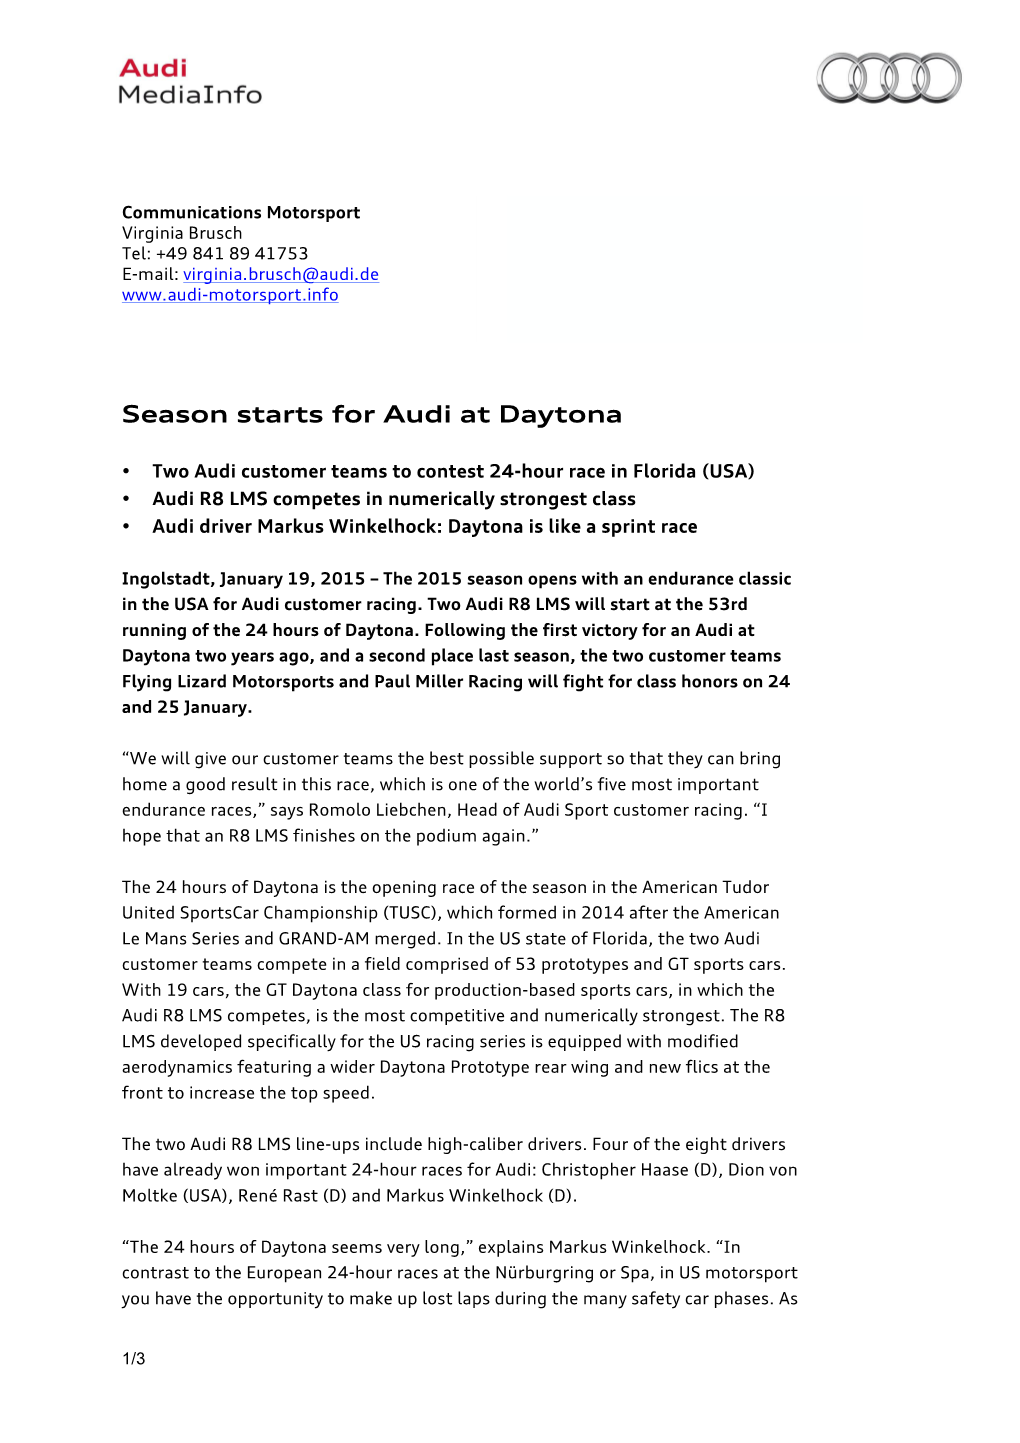 Season Starts for Audi at Daytona